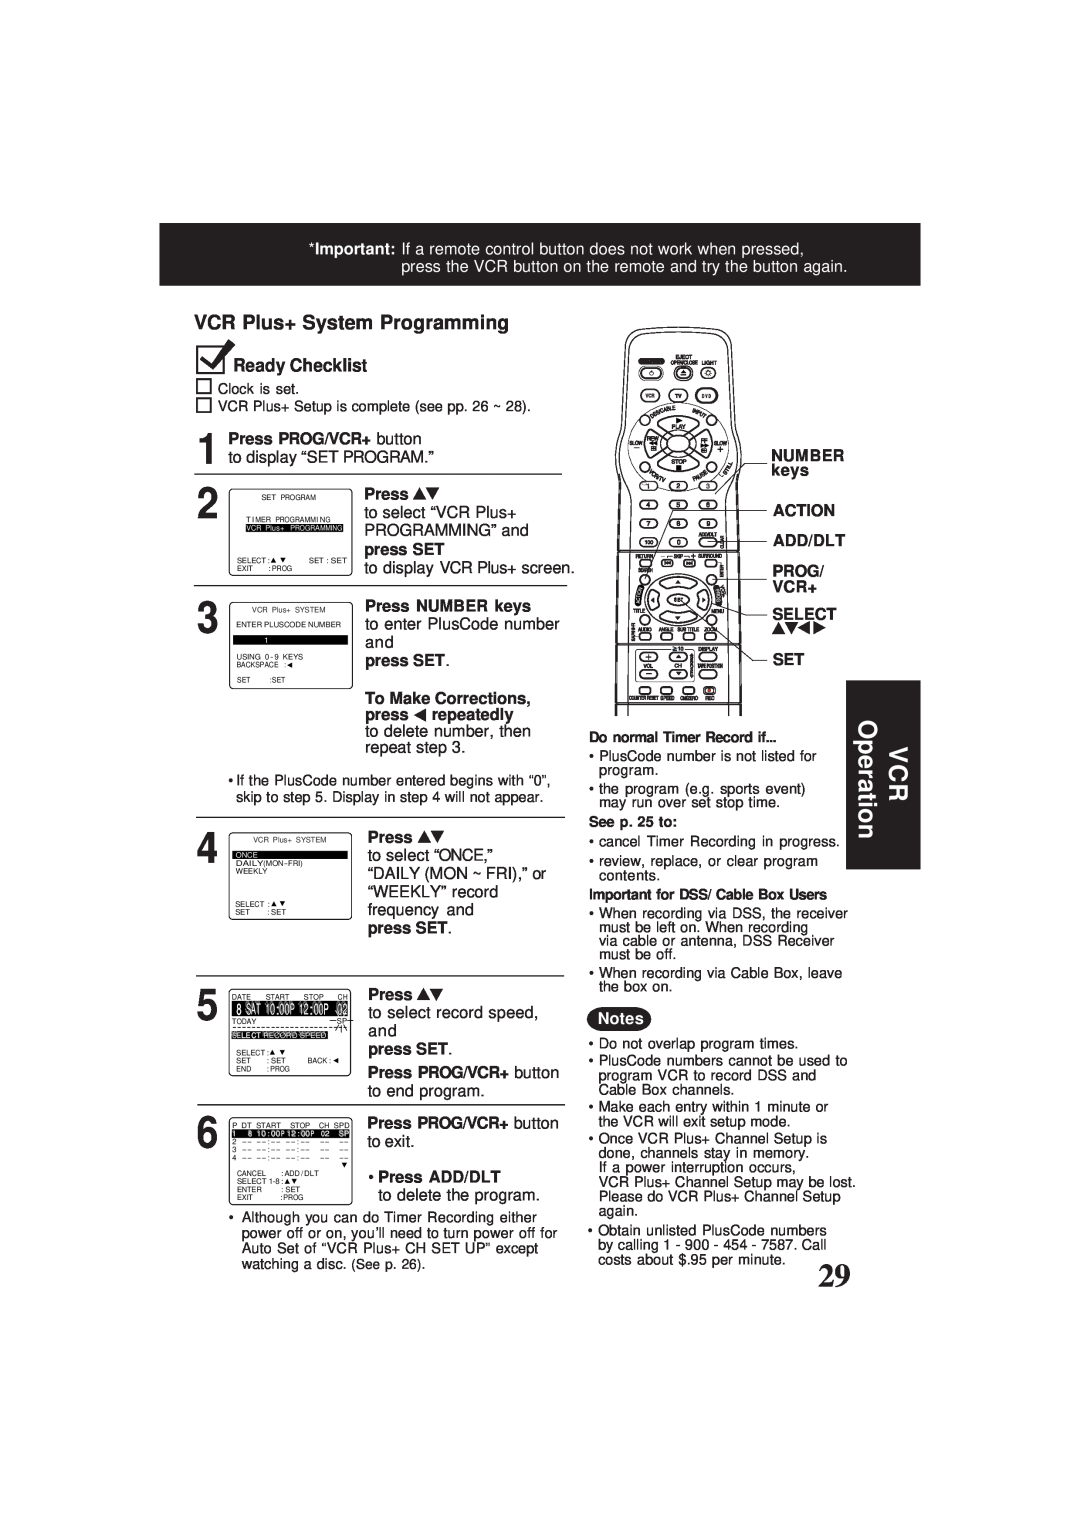 Panasonic PV-D4761 VCR Plus+ System Programming, Ready Checklist, Press PROG/VCR+ button to display “SET PROGRAM.” 